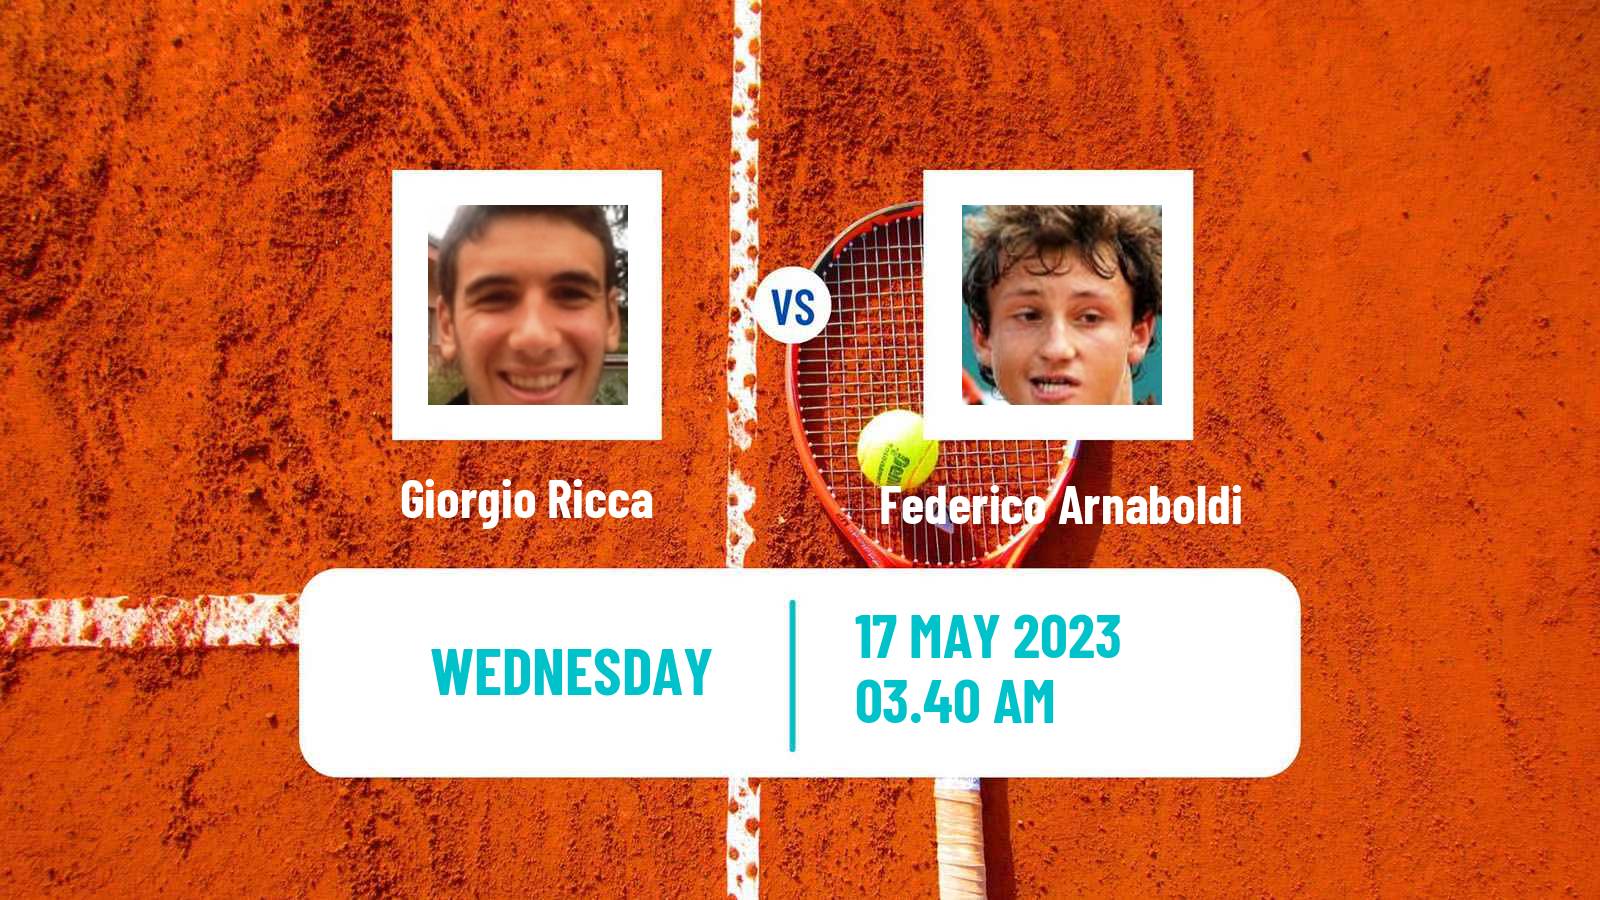 Tennis ITF M25 Reggio Emilia Men Giorgio Ricca - Federico Arnaboldi